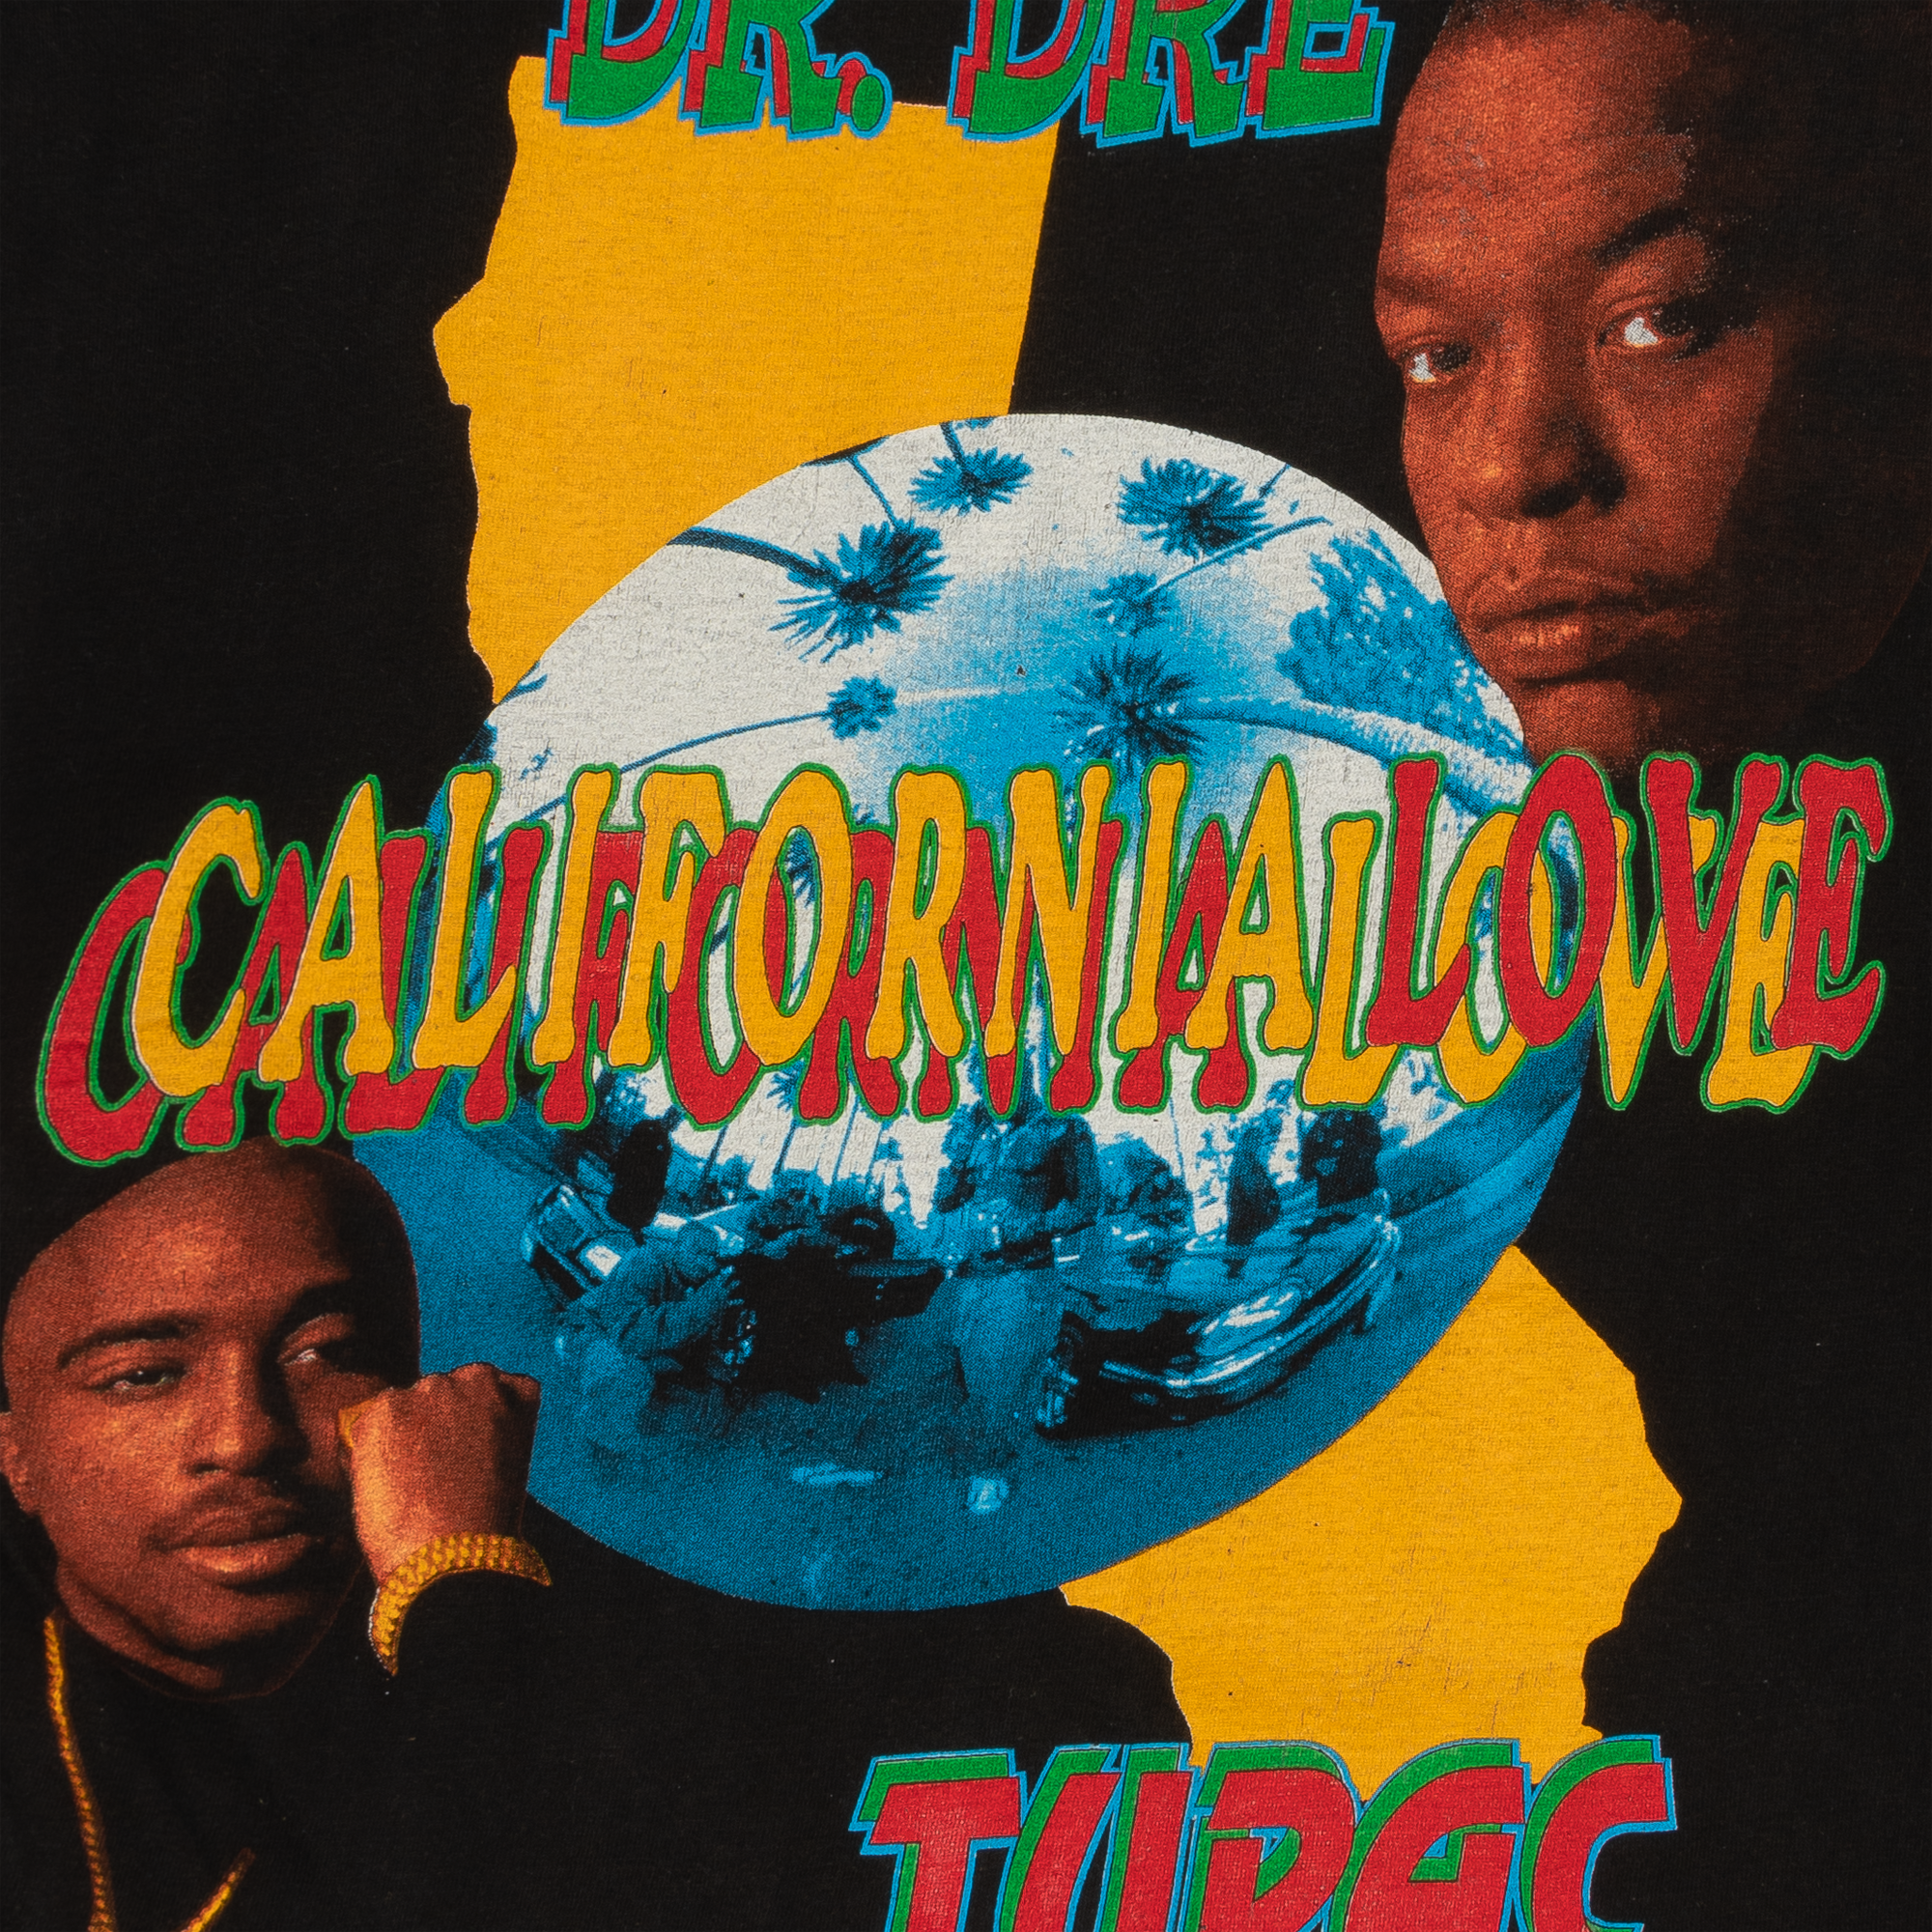 Tupac & Dr Dre "California Love" "All Eyez On Me" Rap Tee Black-PLUS